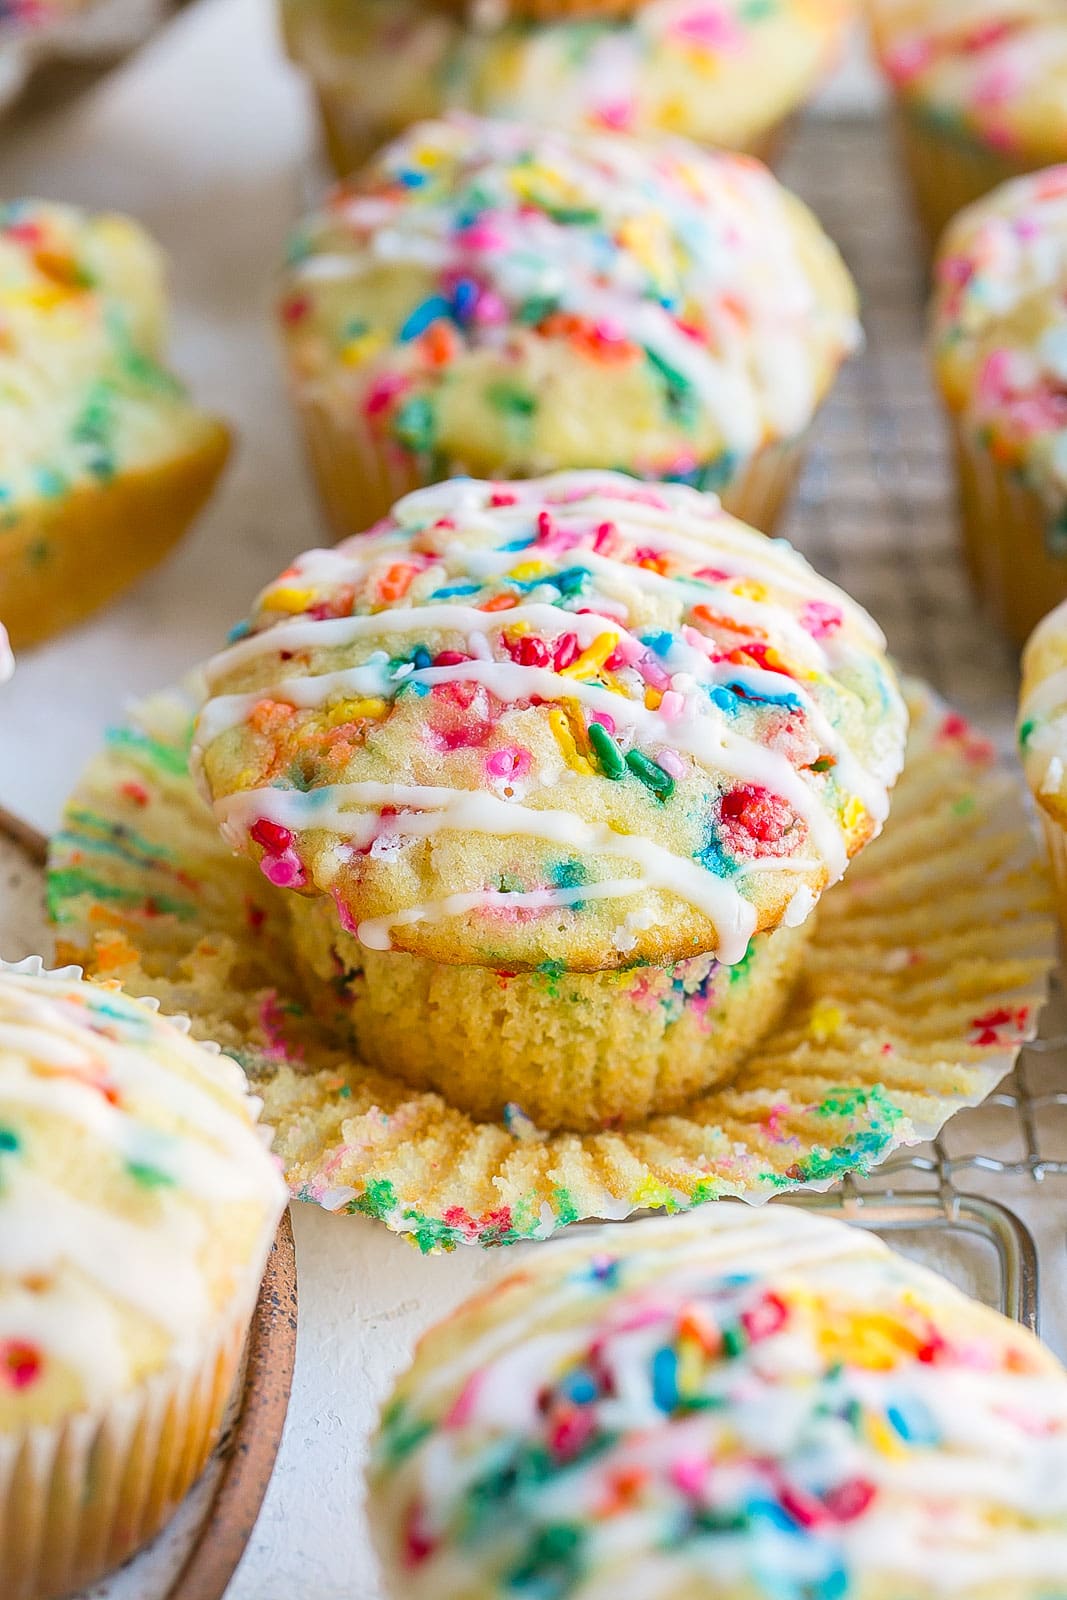 Glazed muffins with rainbow sprinkles.